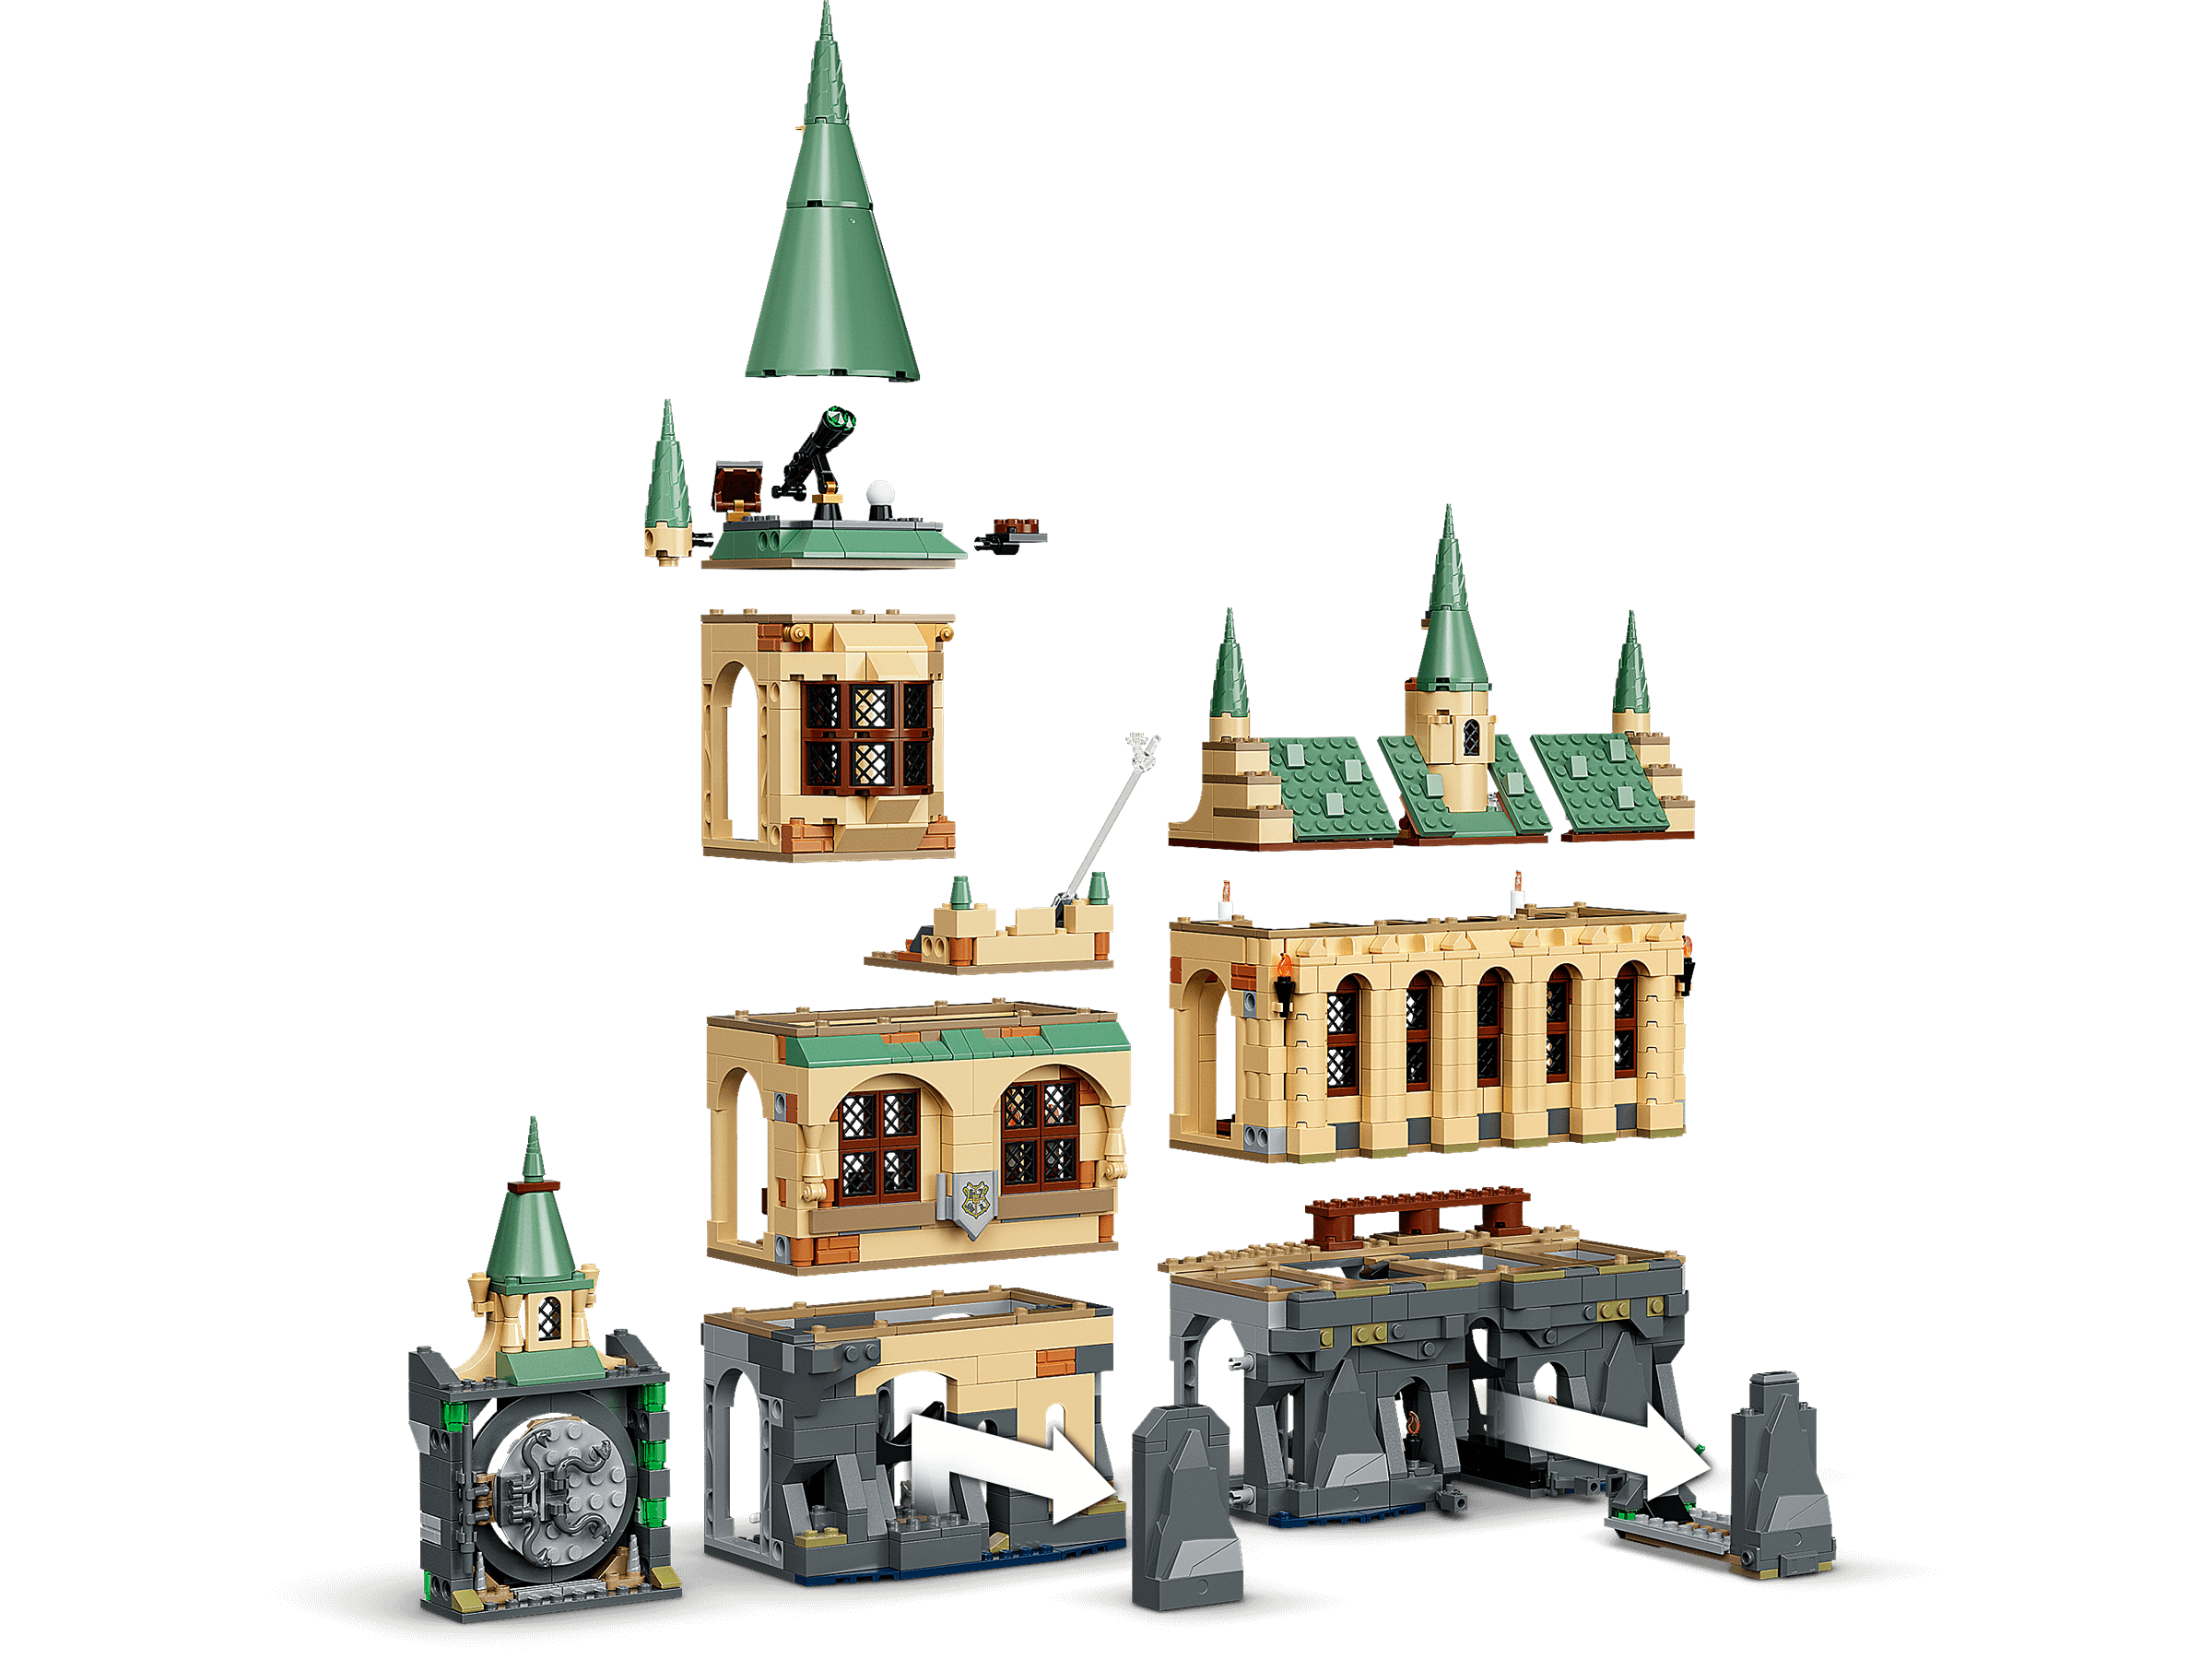 Minifigur aus dem Set 76389 LEGO® Harry Potter™ die Schlange Basilisk